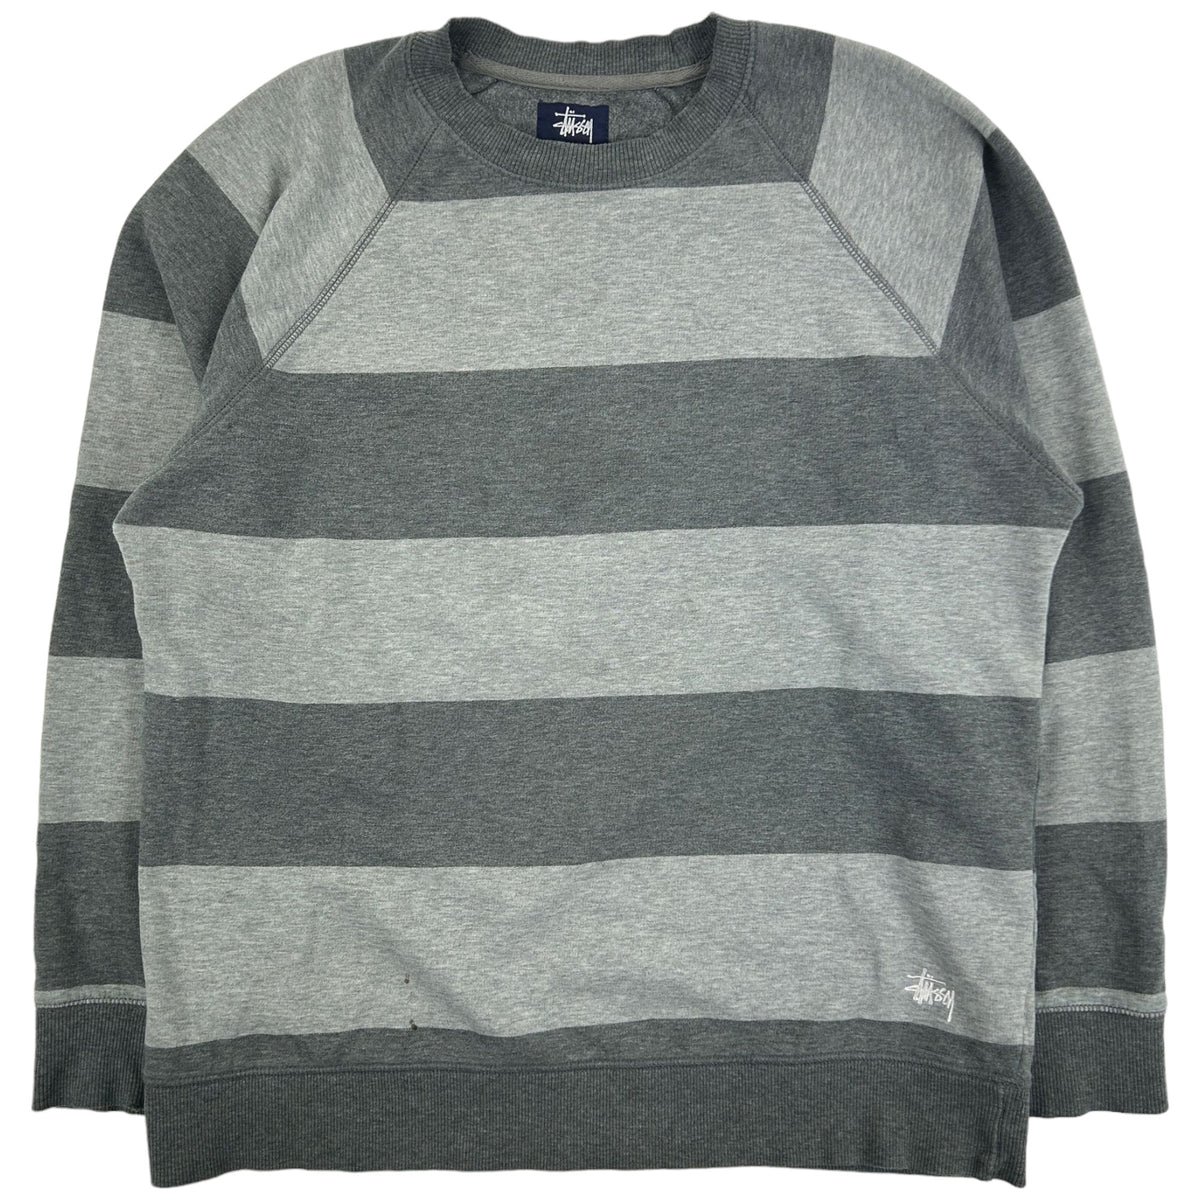 Vintage Stussy Striped Crewneck Sweatshirt Size M